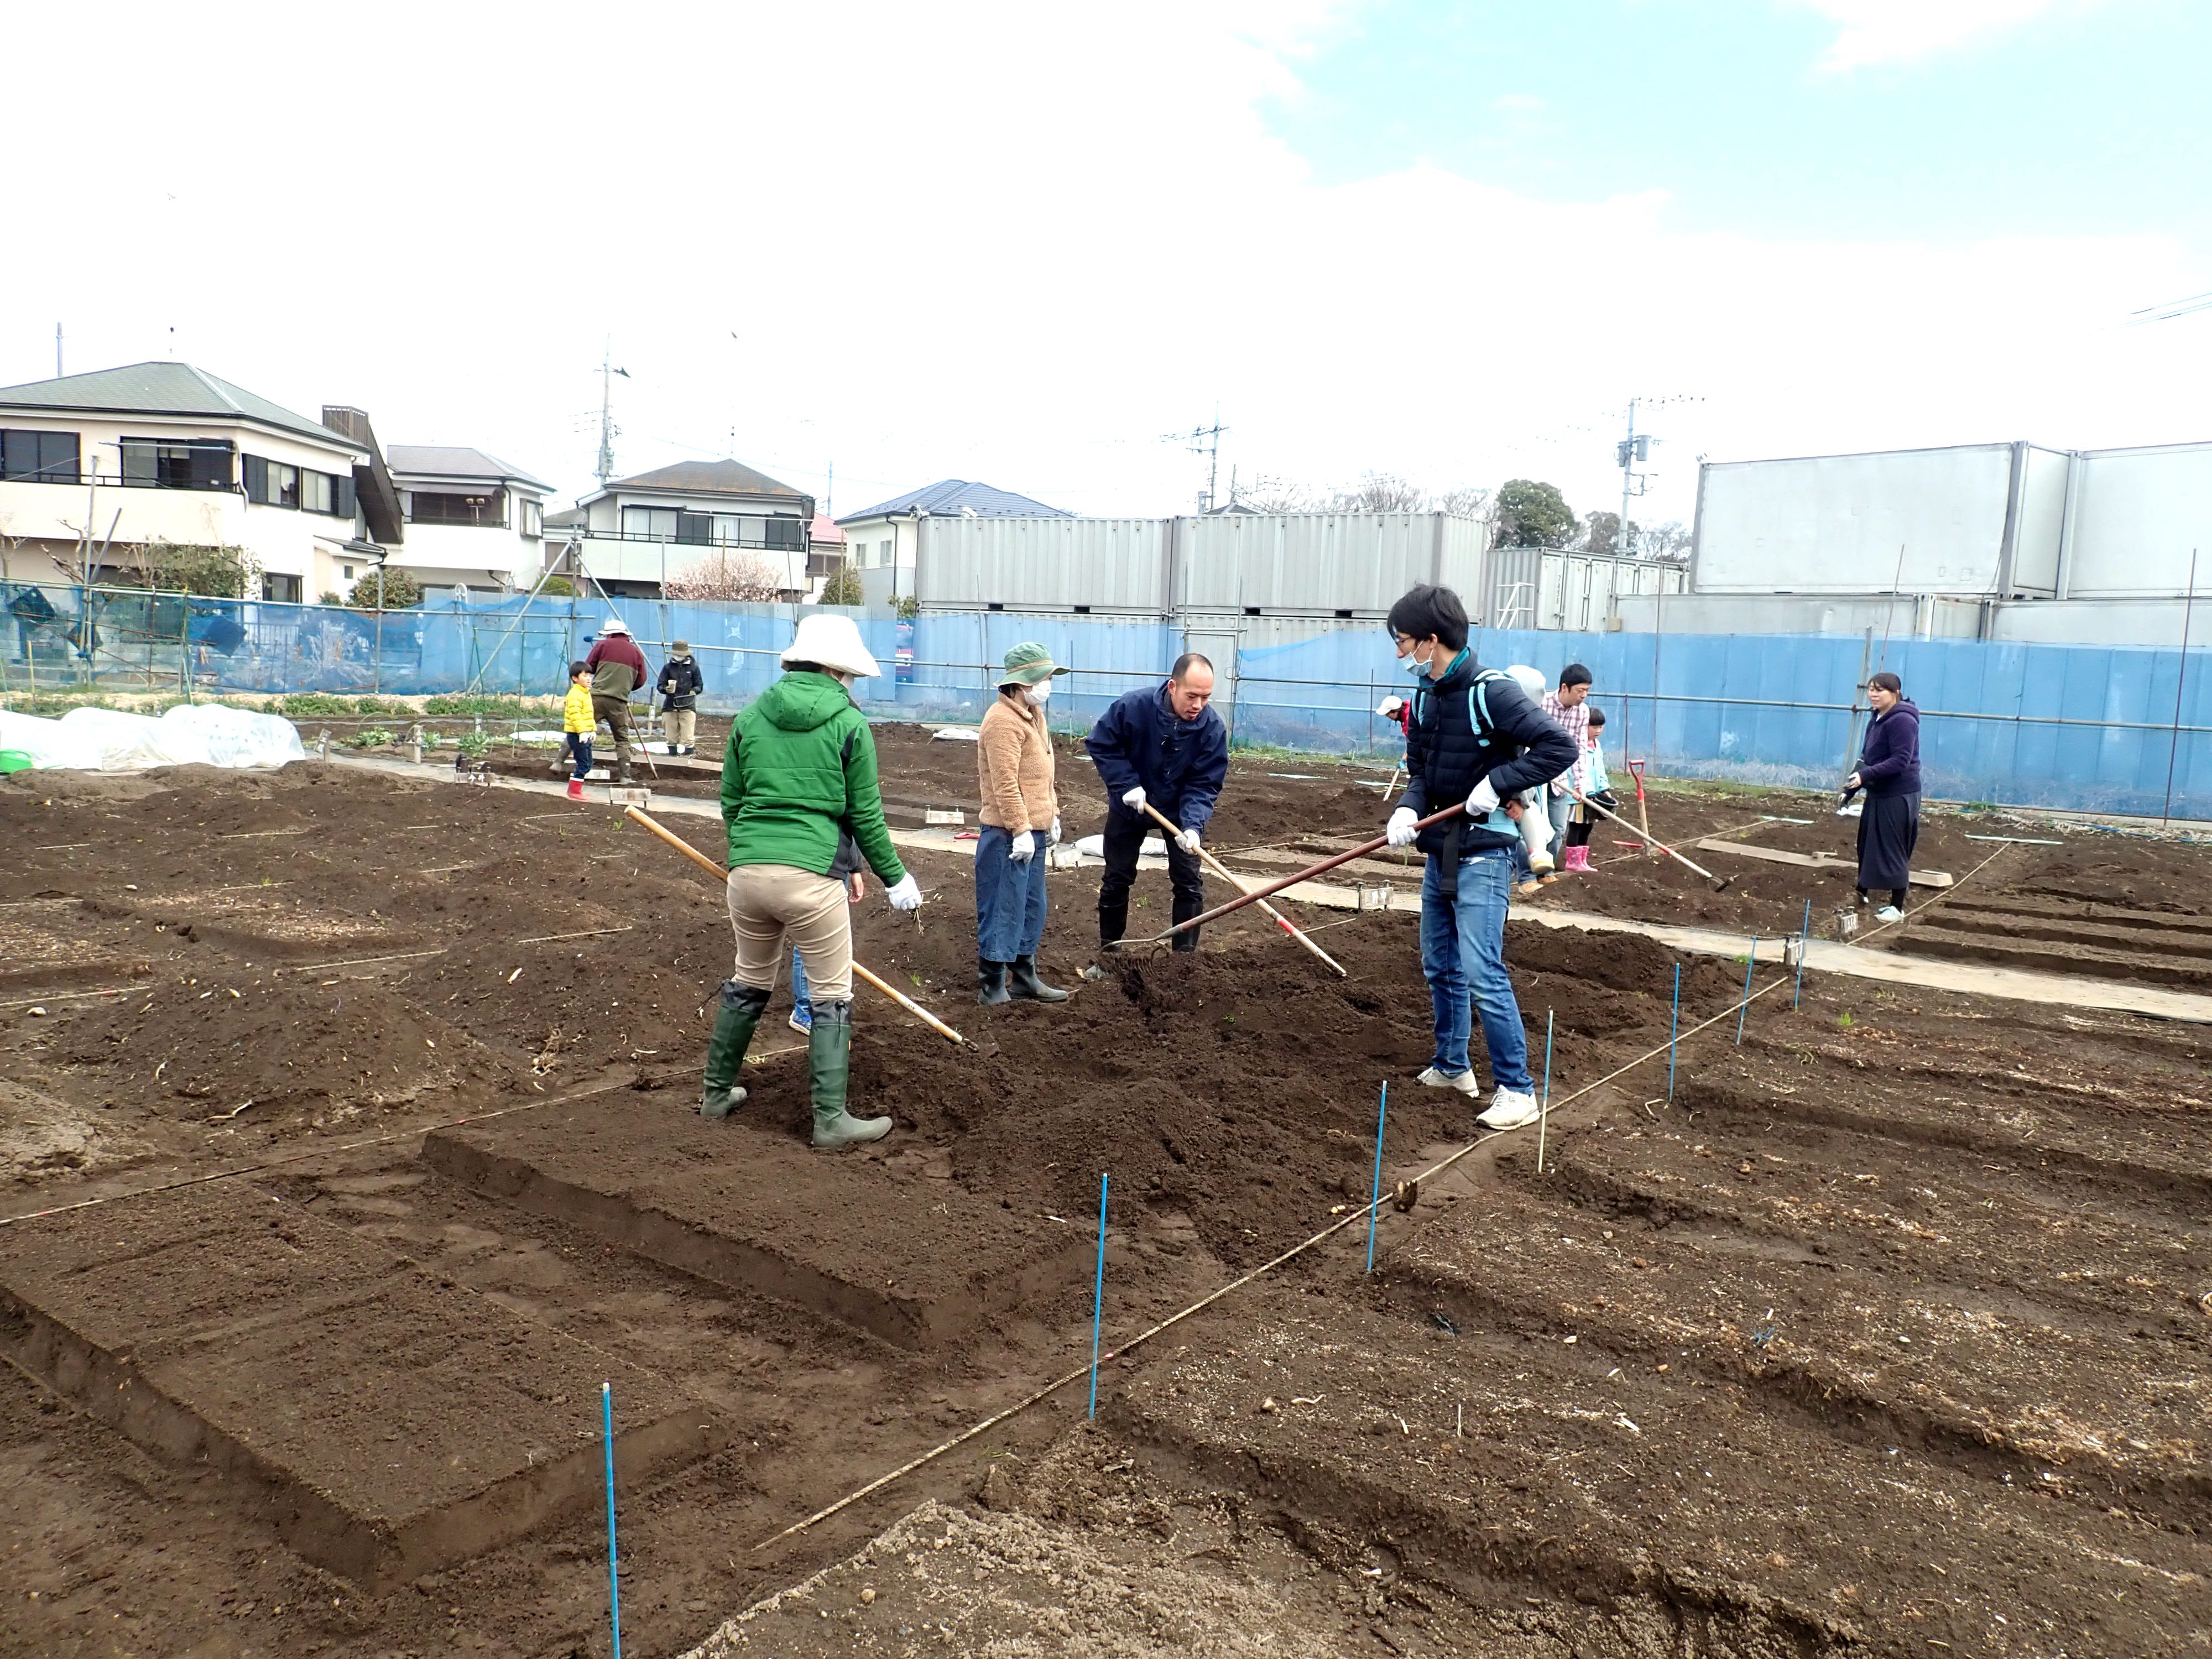 Here’s How To Join A Community Garden In Tokyo - Gardeners helping in the community garden